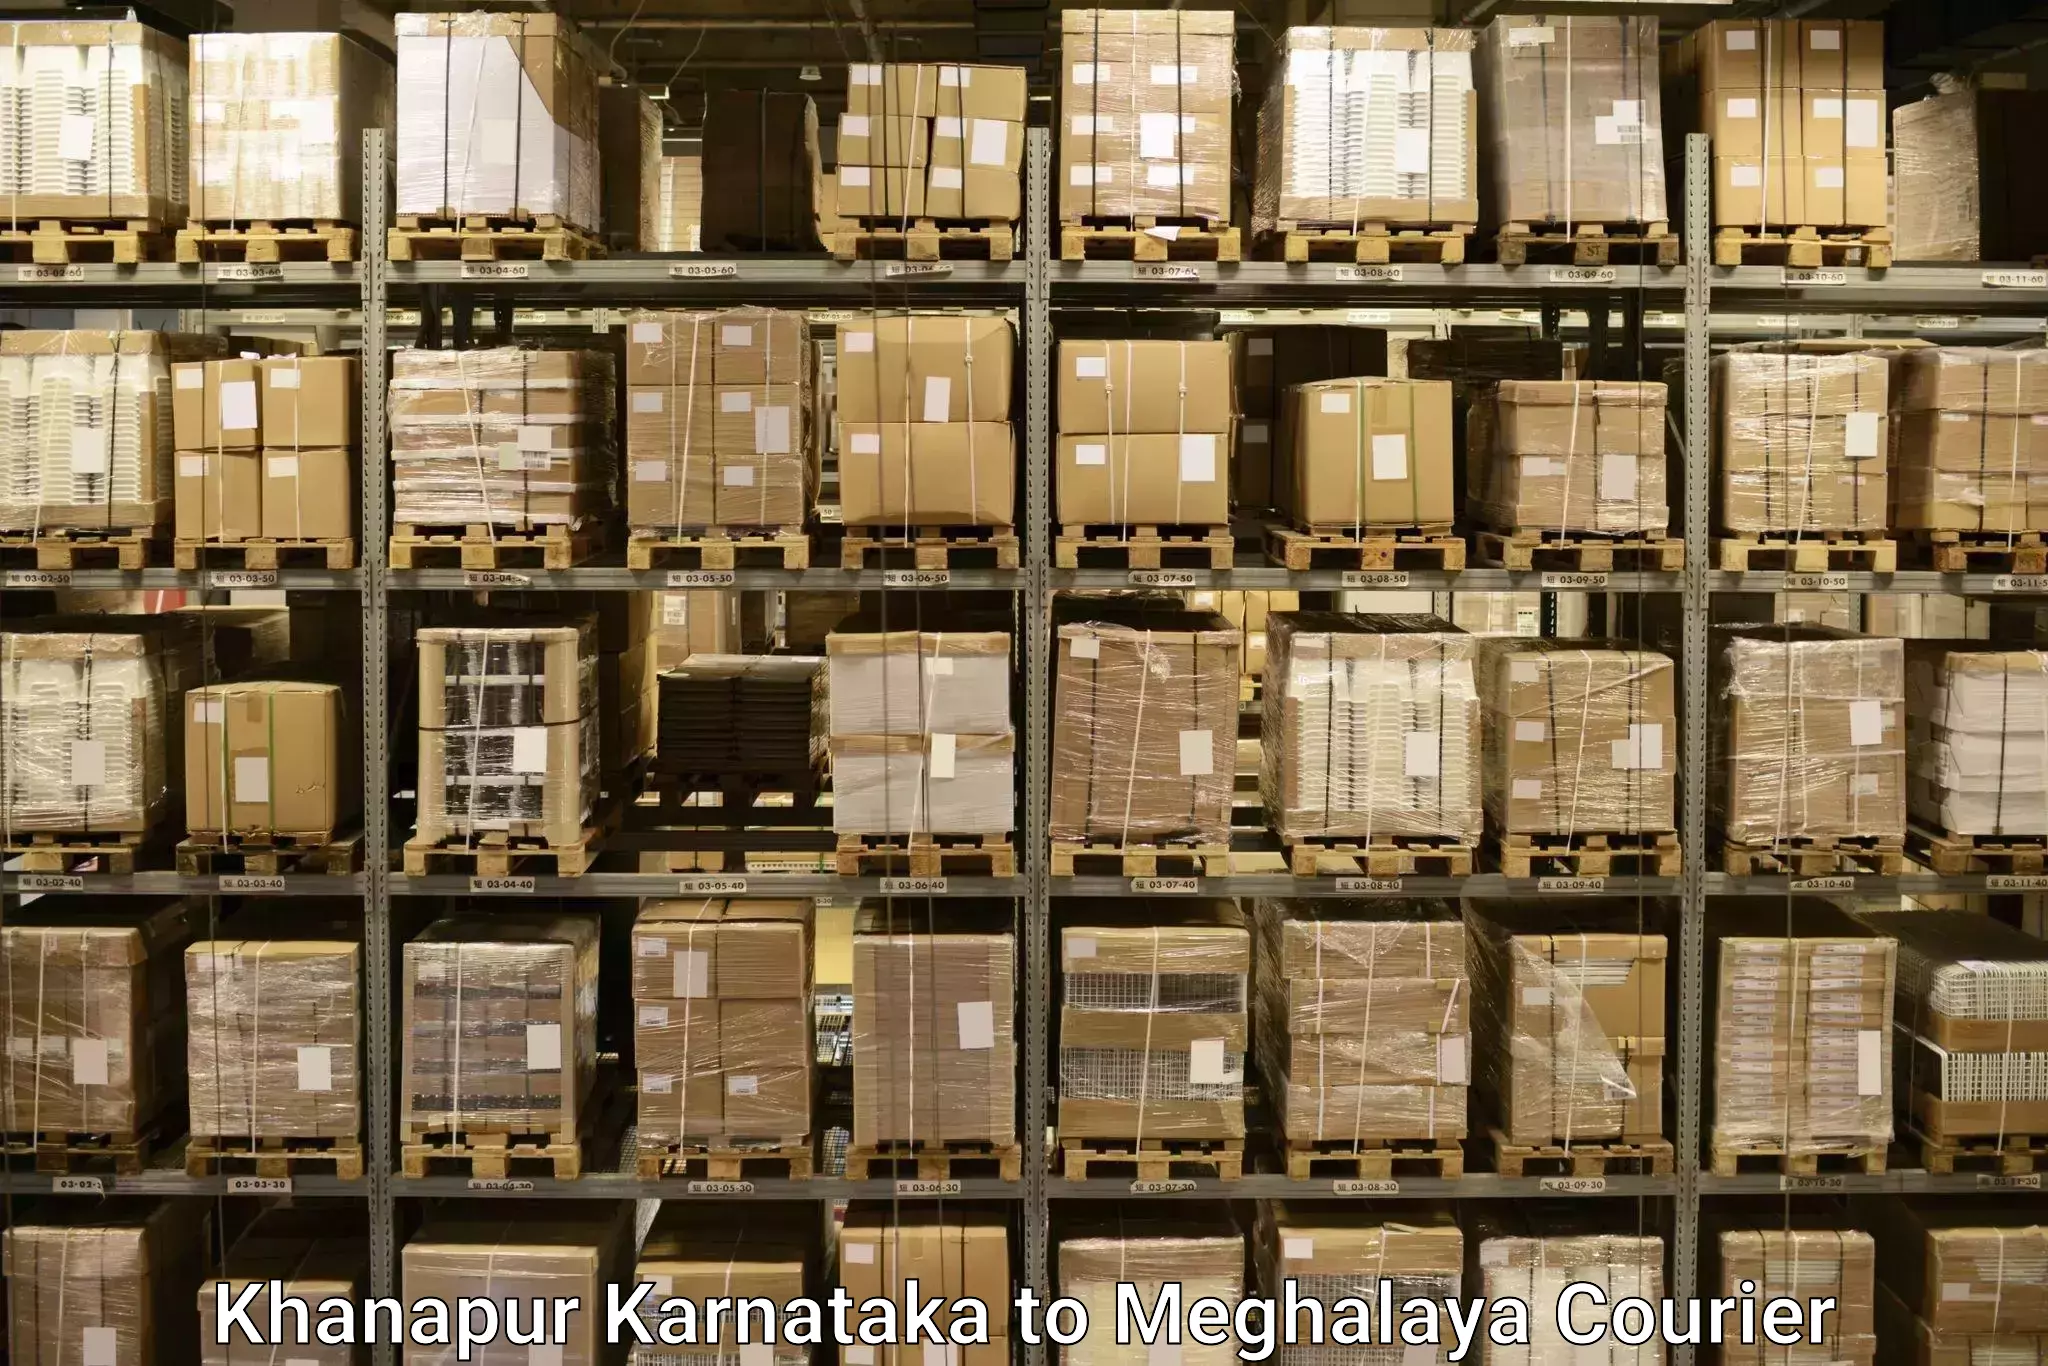 Baggage relocation service Khanapur Karnataka to East Garo Hills